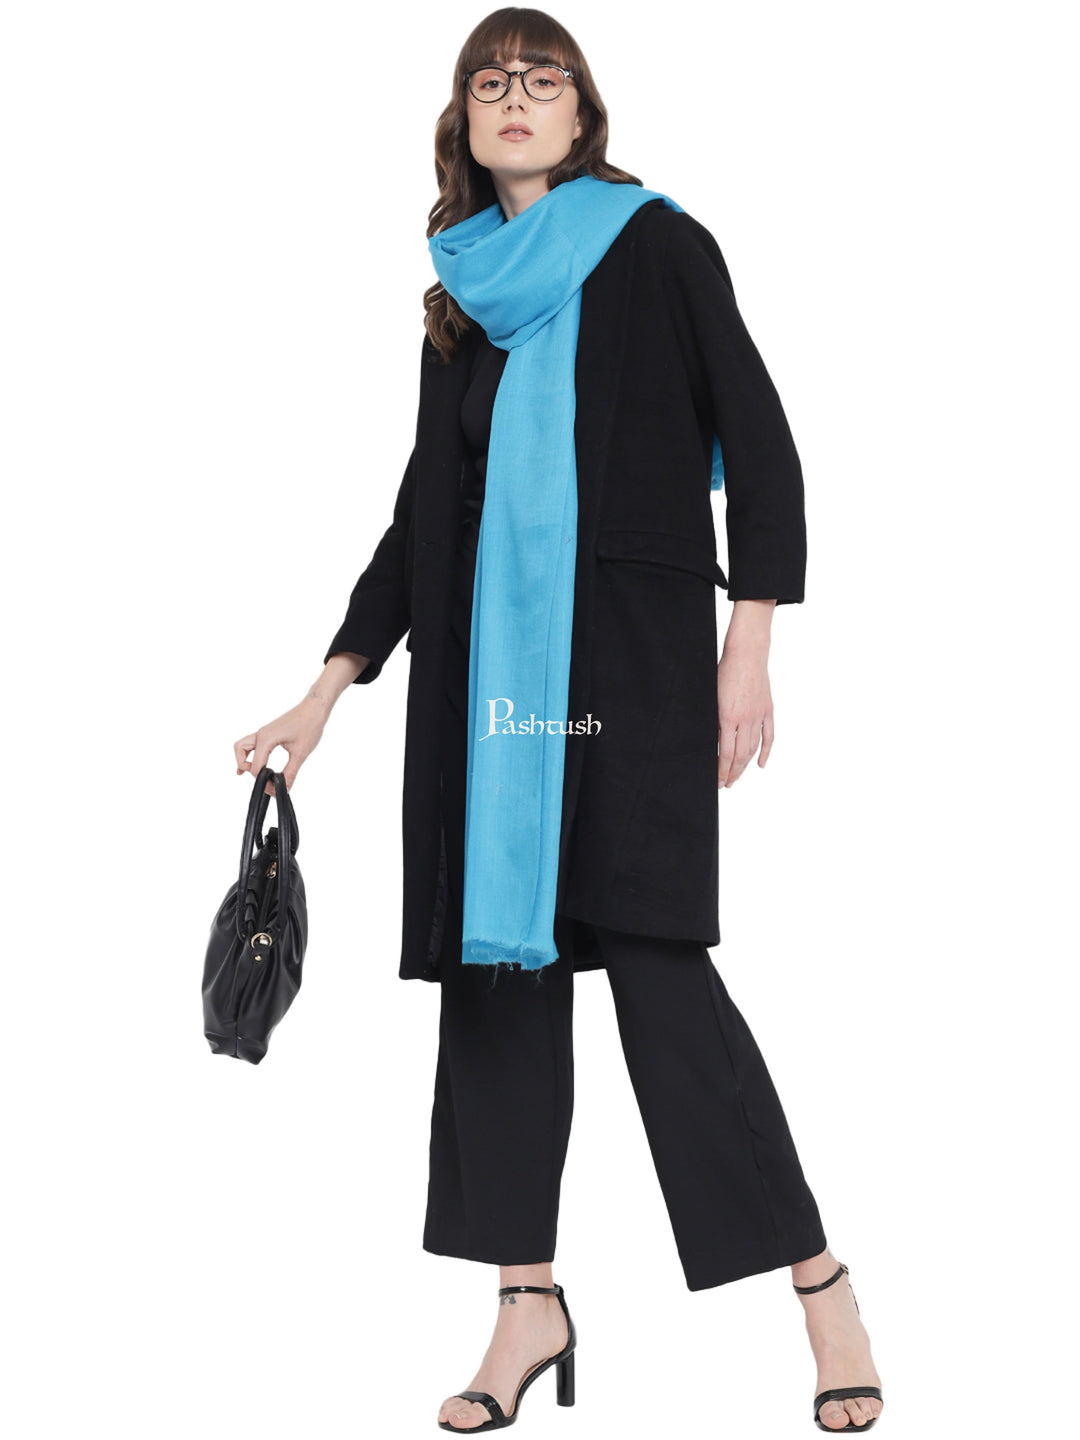 Pashtush India Womens Shawls Pashtush Womens Fine Wool Shawl, Extra Soft, Warm, Light Weight, Jasmine Blue